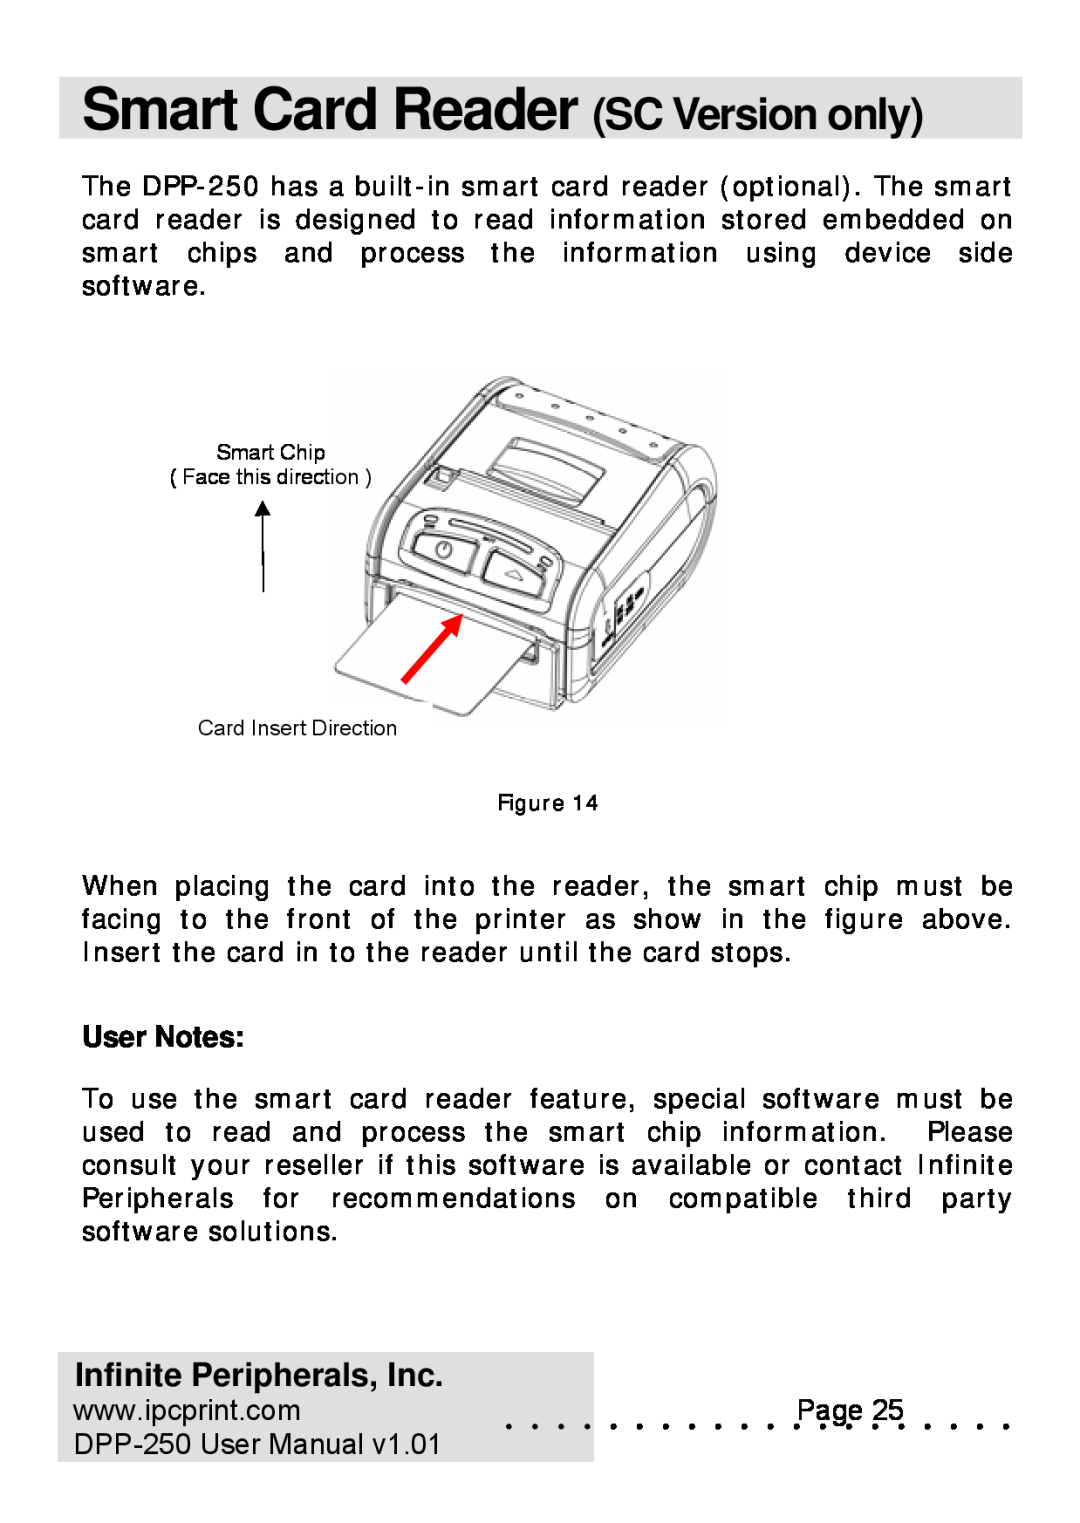 Infinite Peripherals DPP-250 user manual Smart Card Reader SC Version only, Infinite Peripherals, Inc, User Notes 